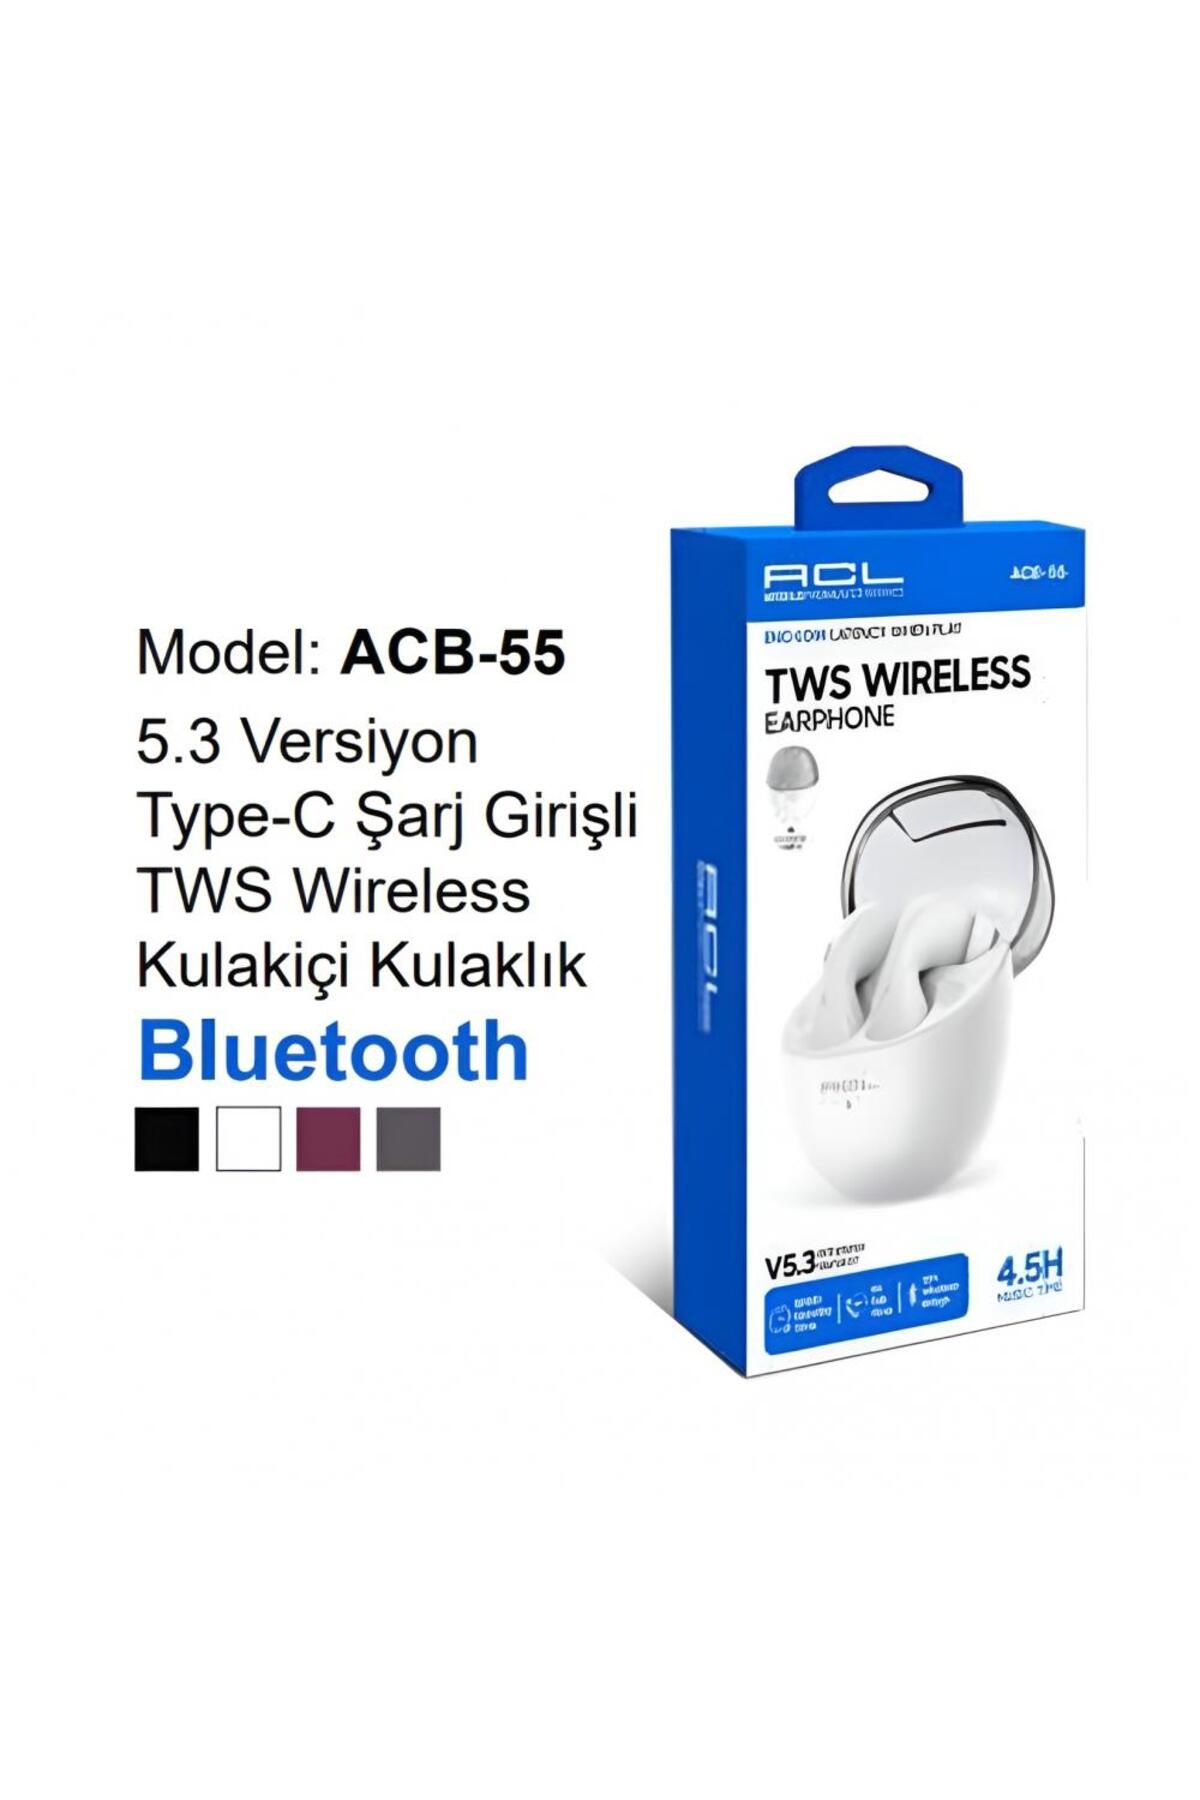 ACL ACB-55 5.3 Versiyon Type-C Şarj Girişli TWS Wireless Kulakiçi Kulaklık